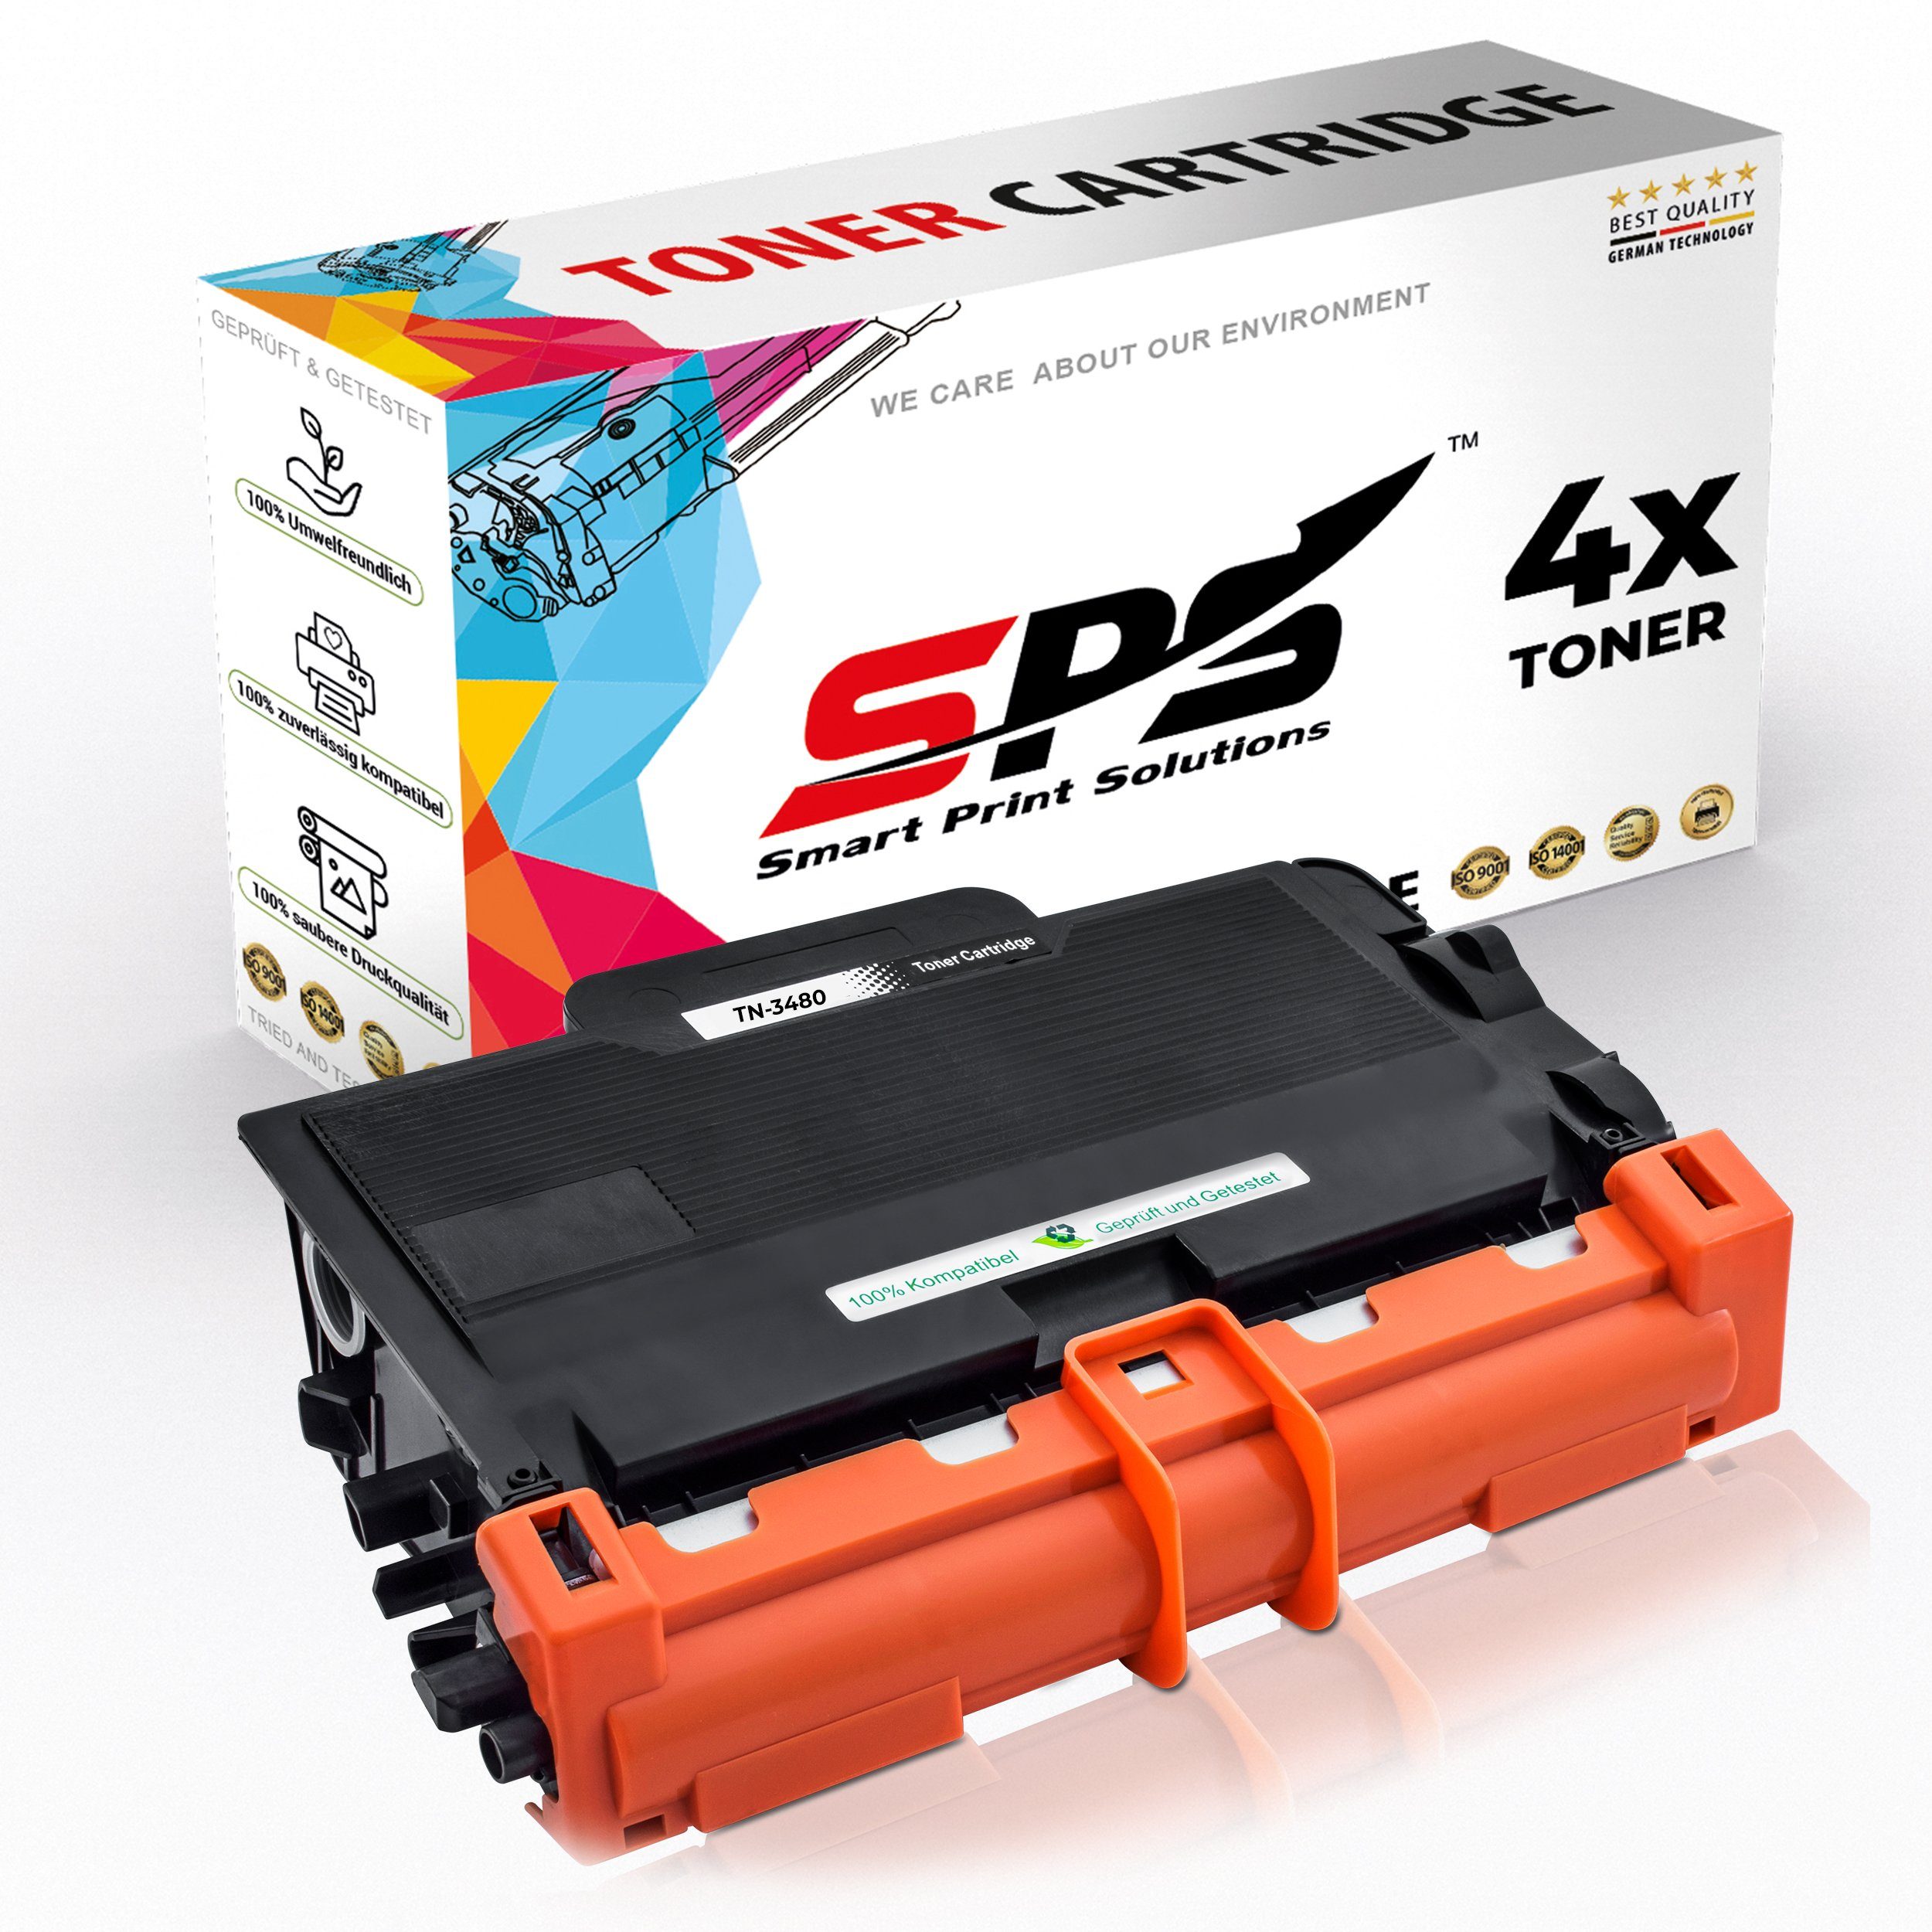 SPS Tonerkartusche Kompatibel für Brother DCP-L5500 TN-3430, (4er Pack) | Tonerpatronen